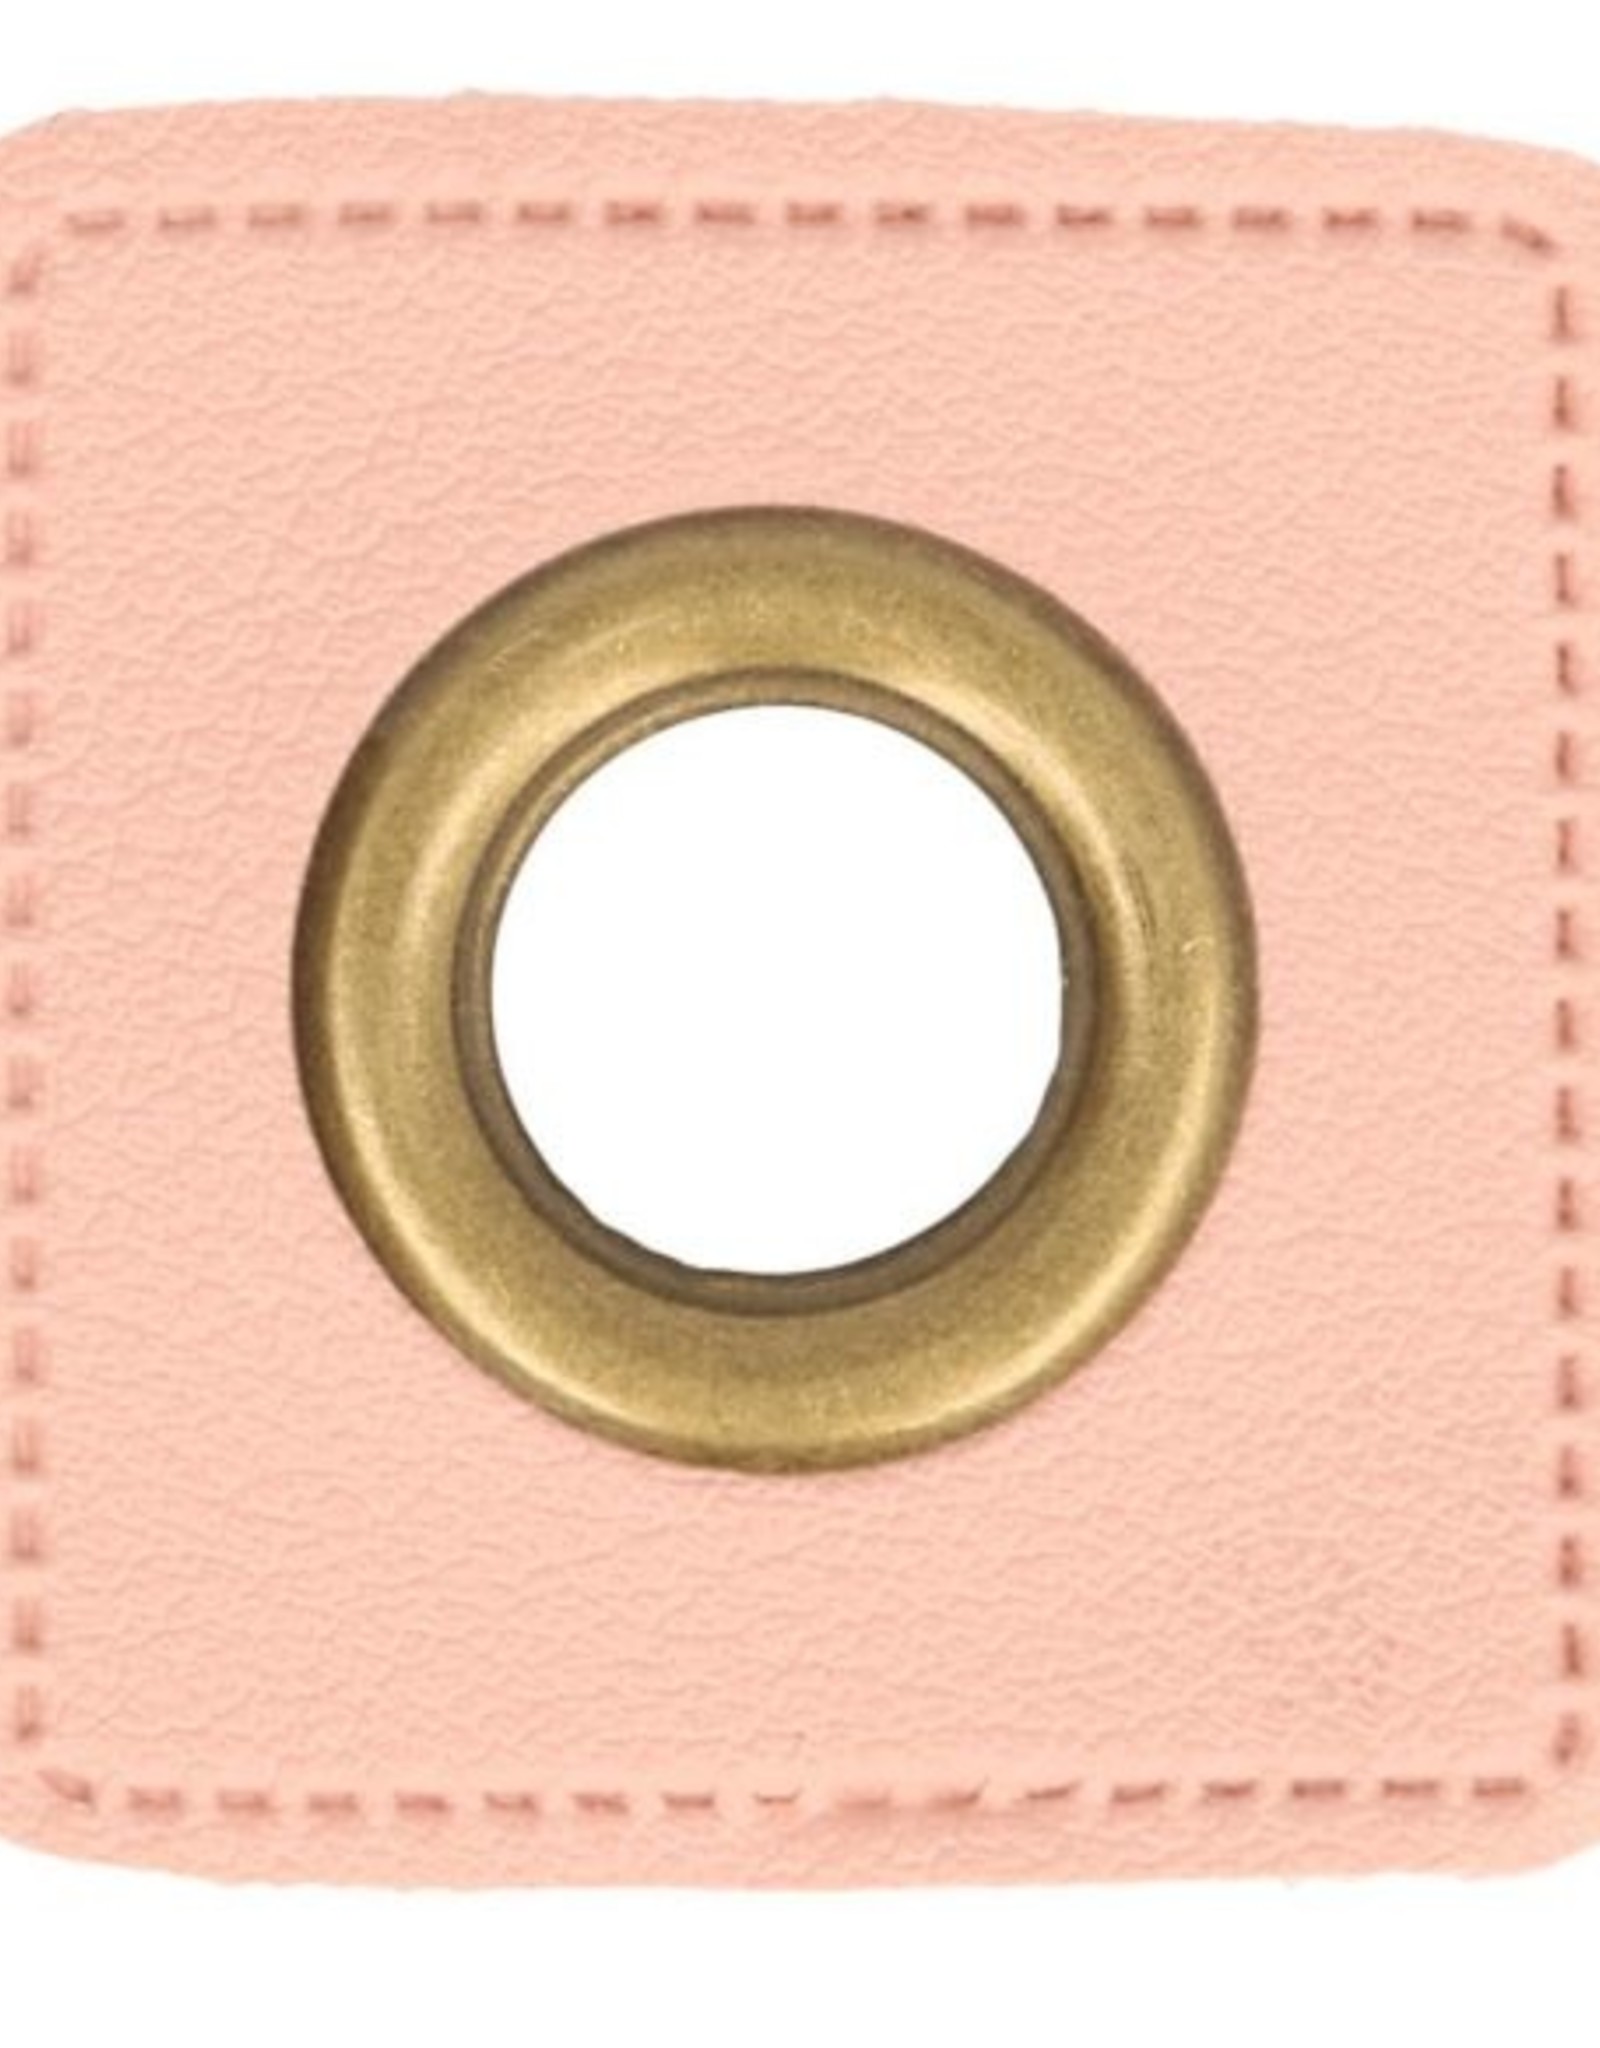 Nestelring brons met roze leder 8mm